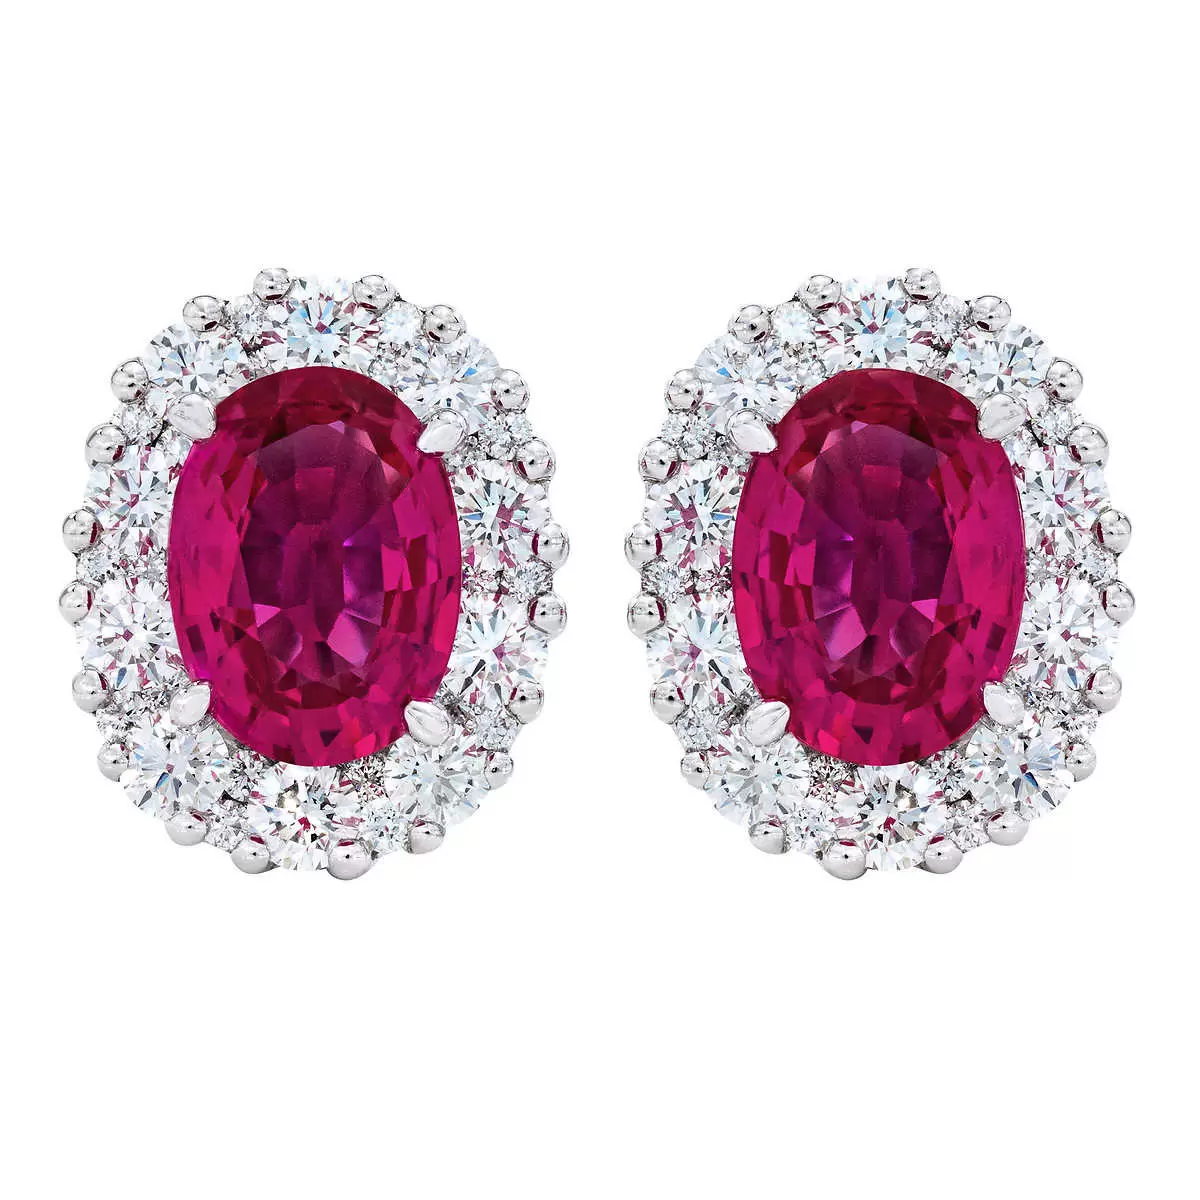 Oval Cut Ruby & 0.74ctw Diamond Earrings, 14ct White Gold